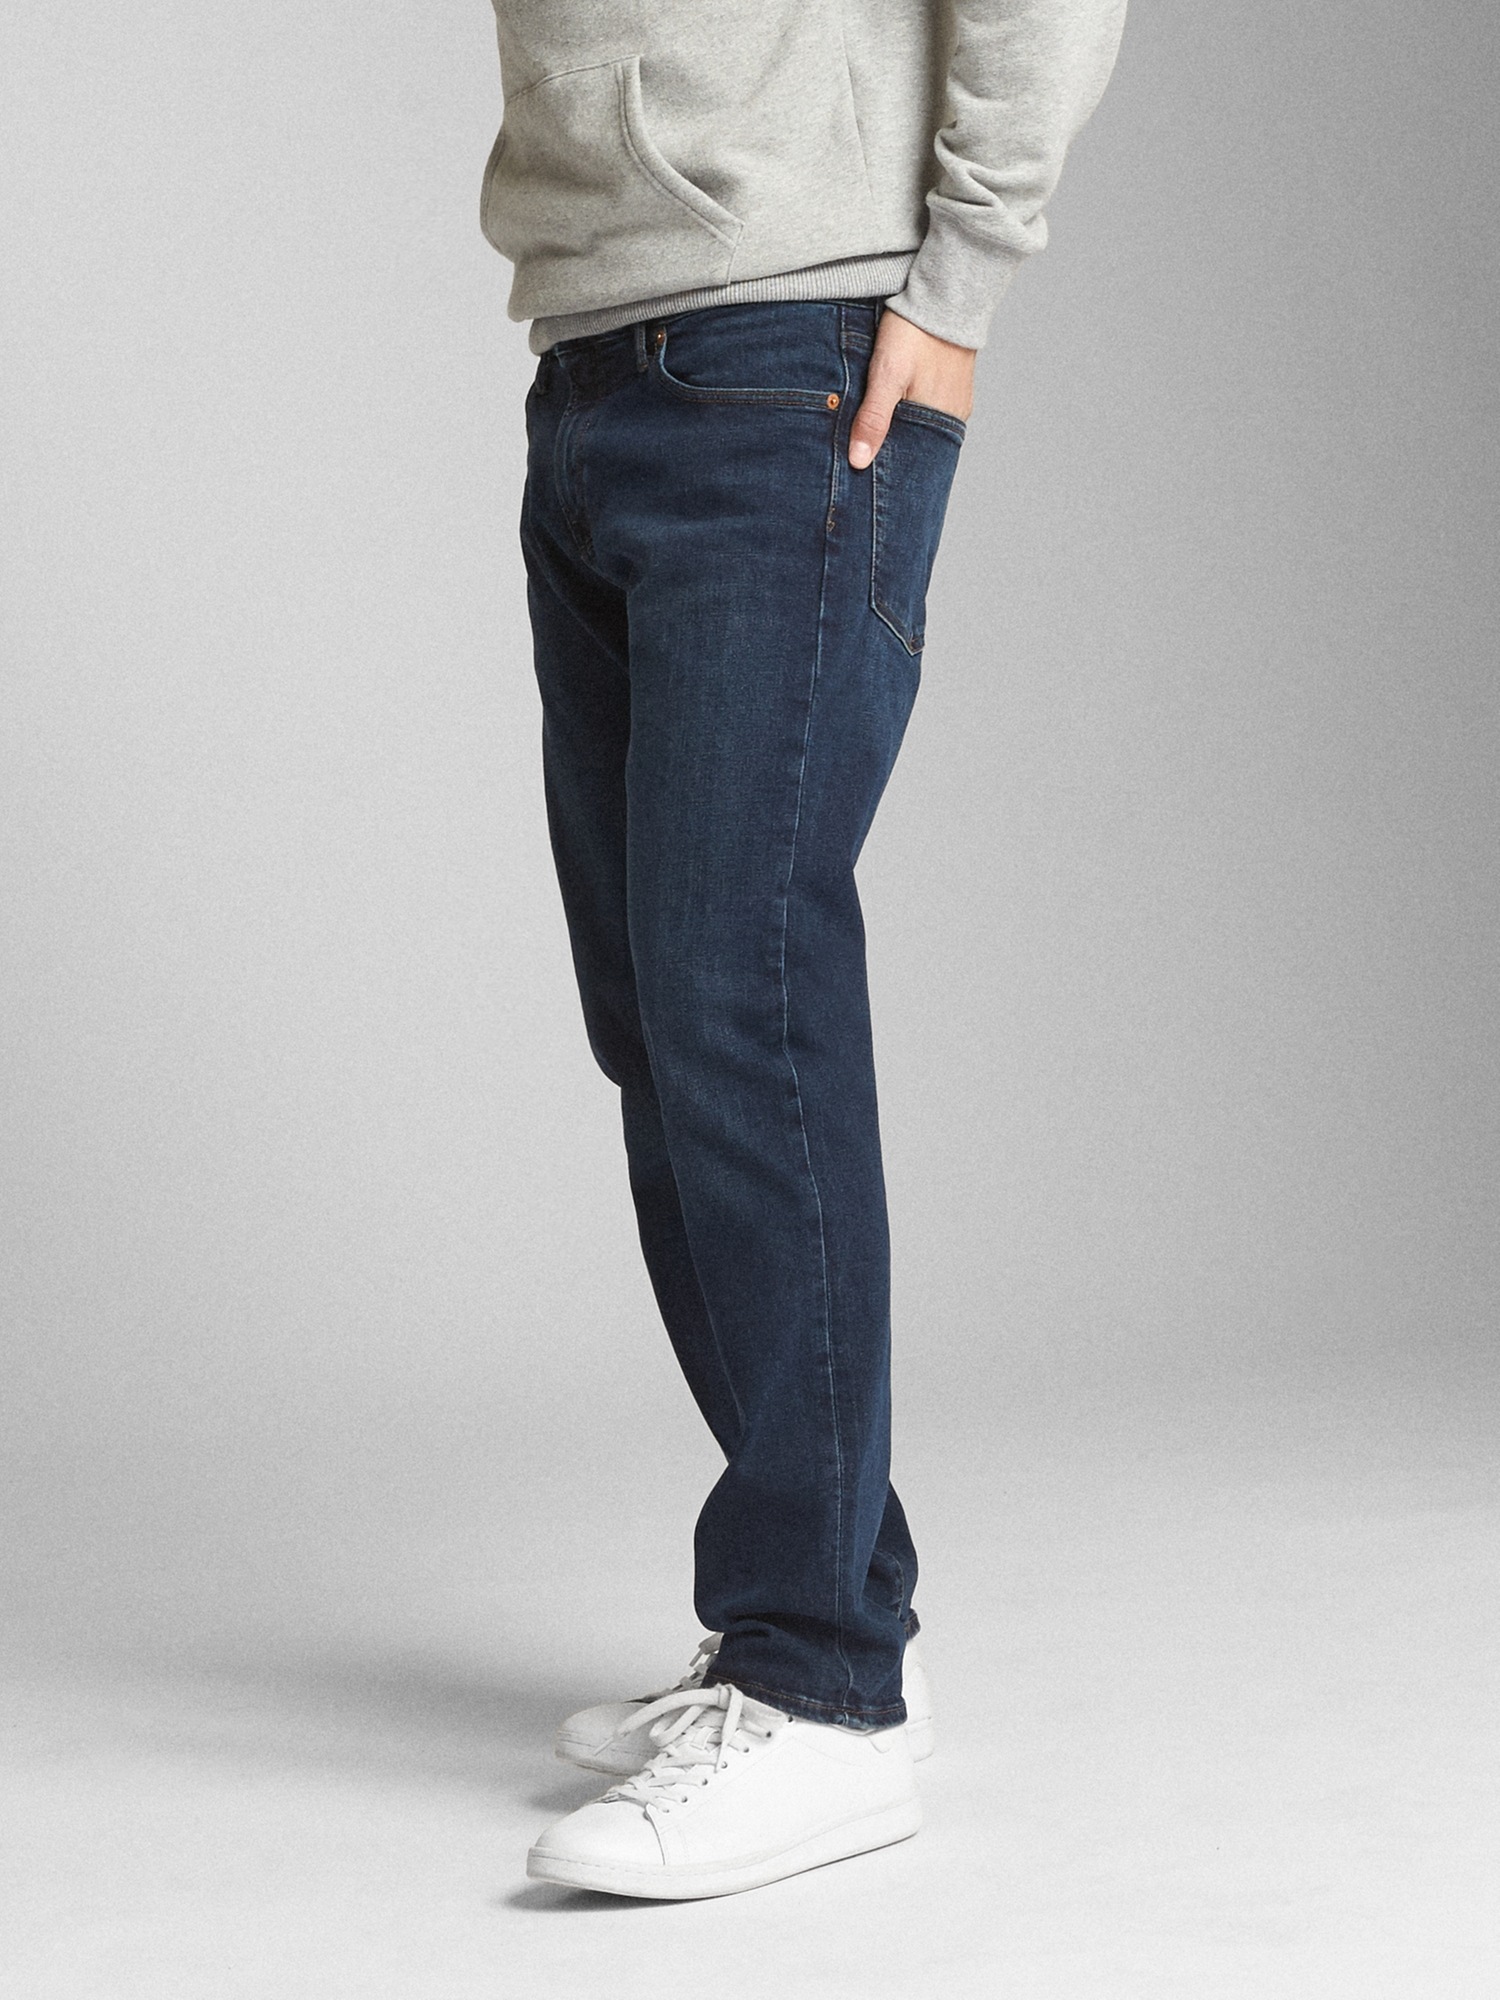 gap slim fit jeans mens